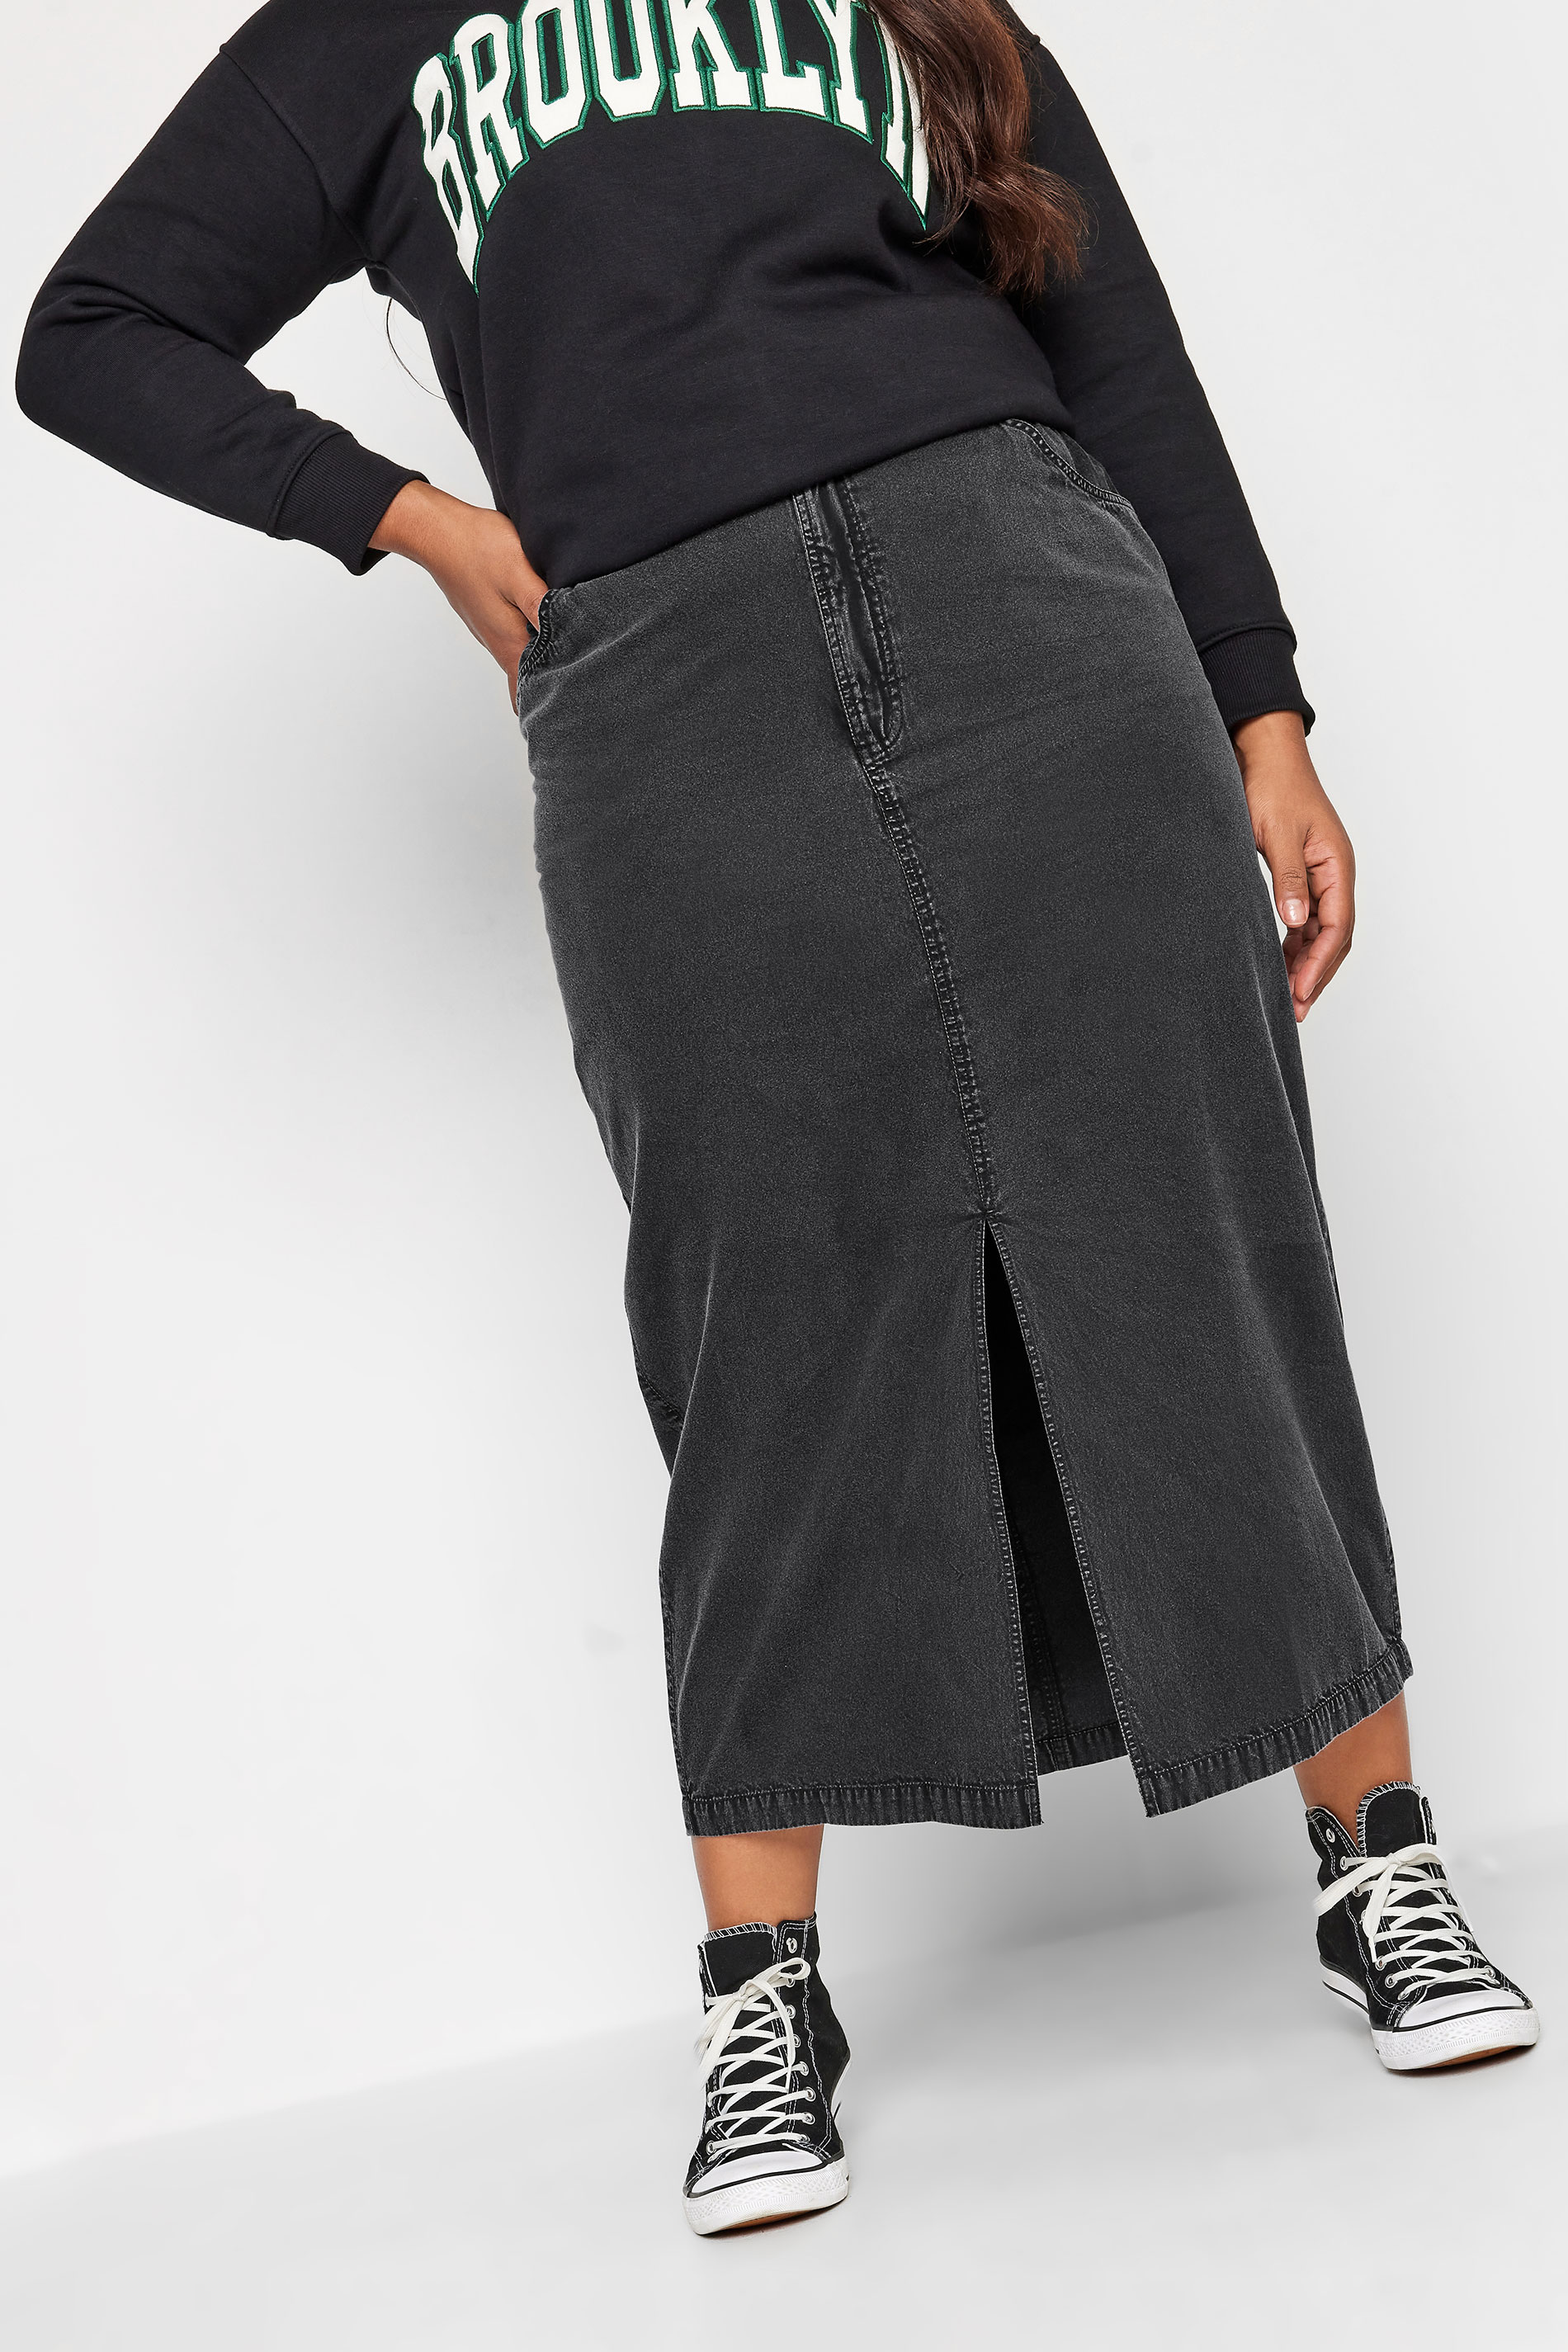 YOURS Curve Plus Size Black Acid Wash Midaxi Denim Skirt | Yours Clothing  1